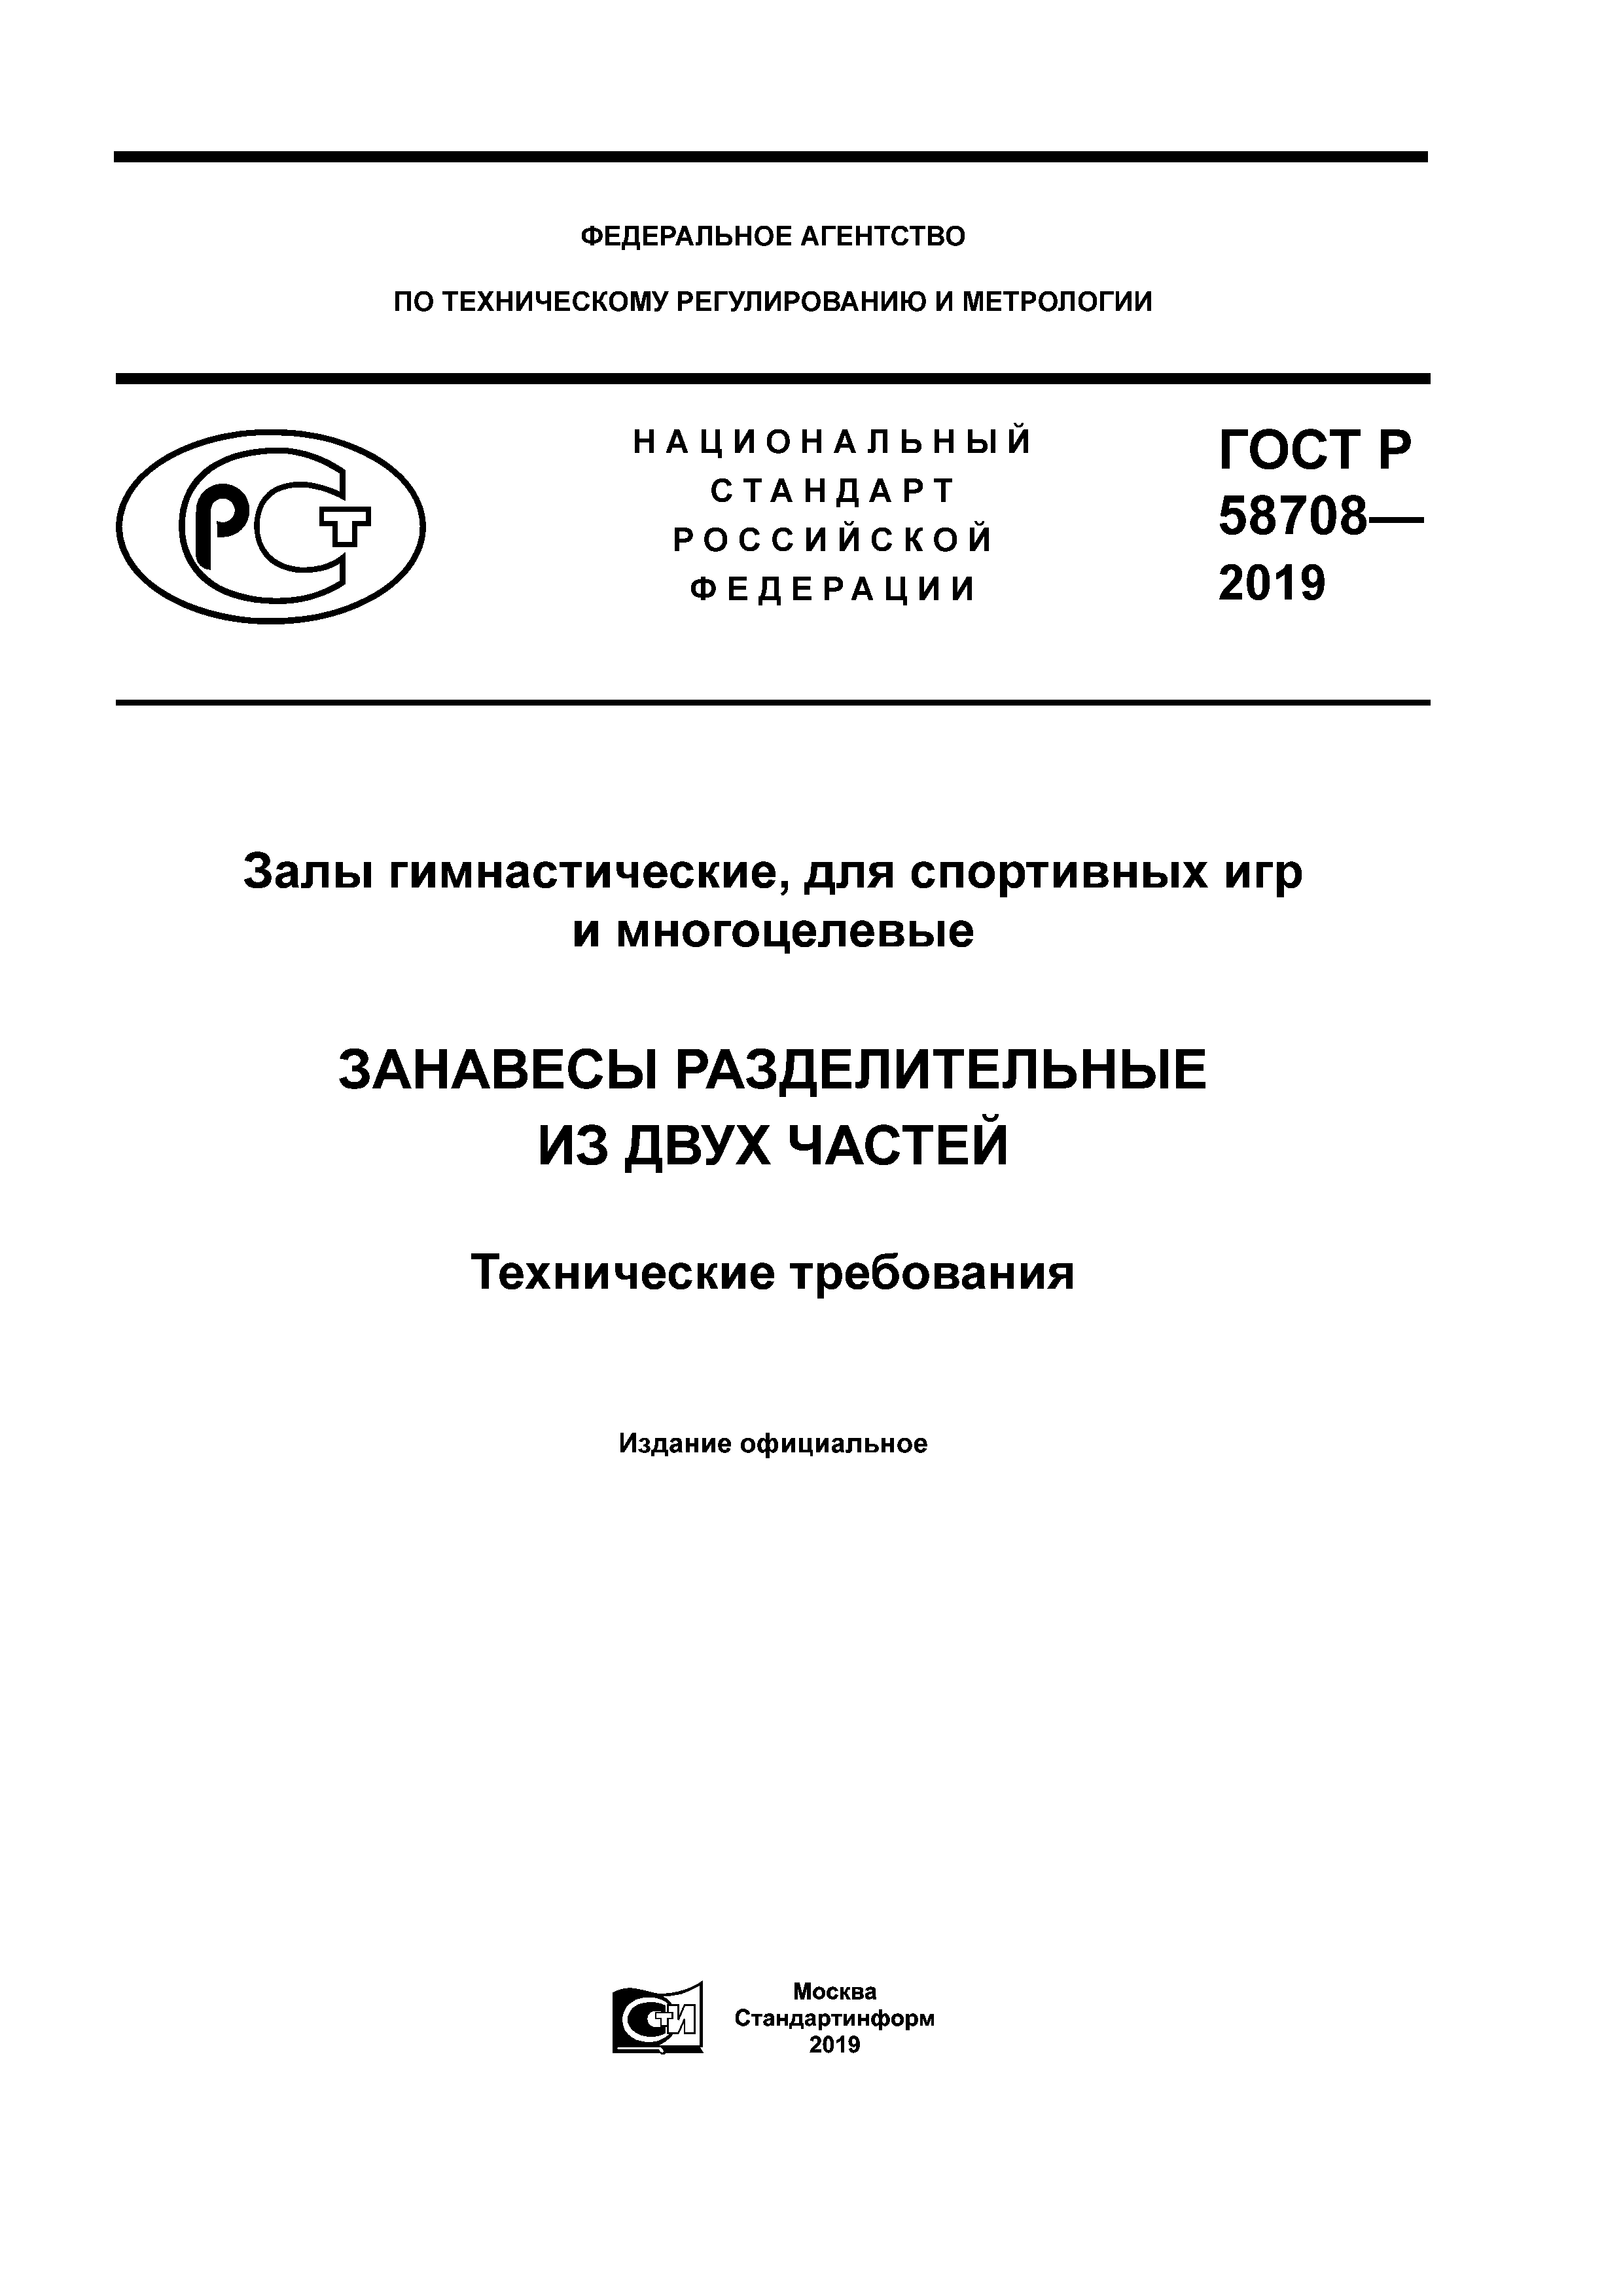 ГОСТ Р 58708-2019